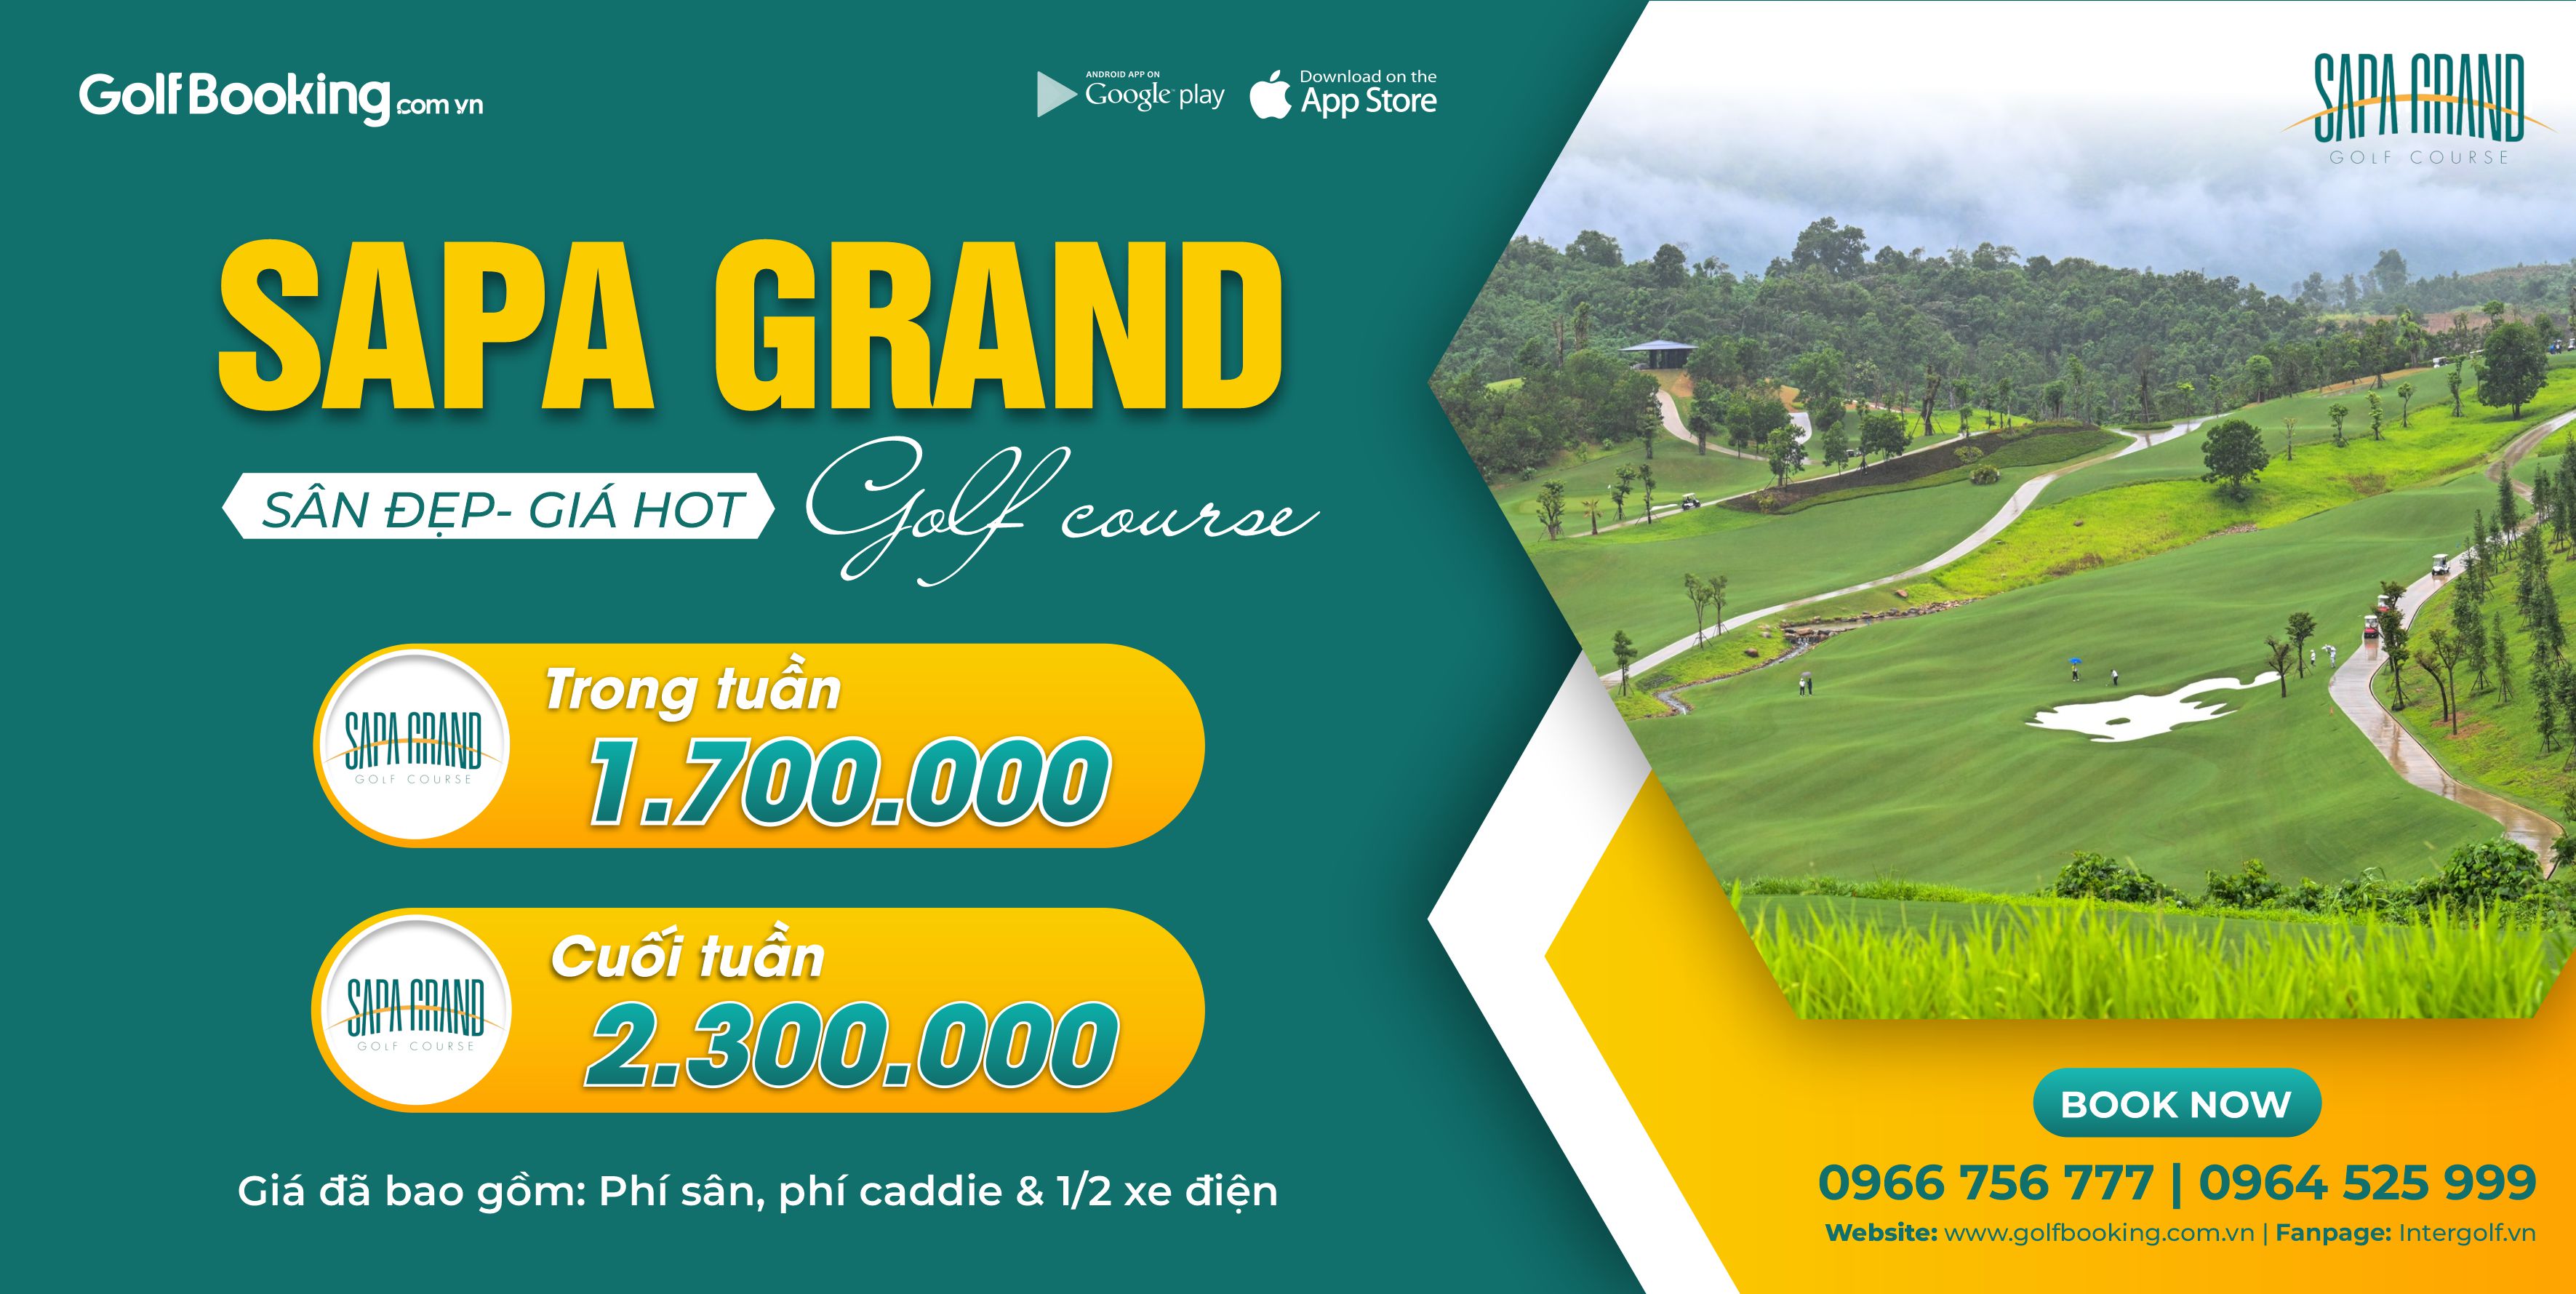 Sapa Grand Golf Course